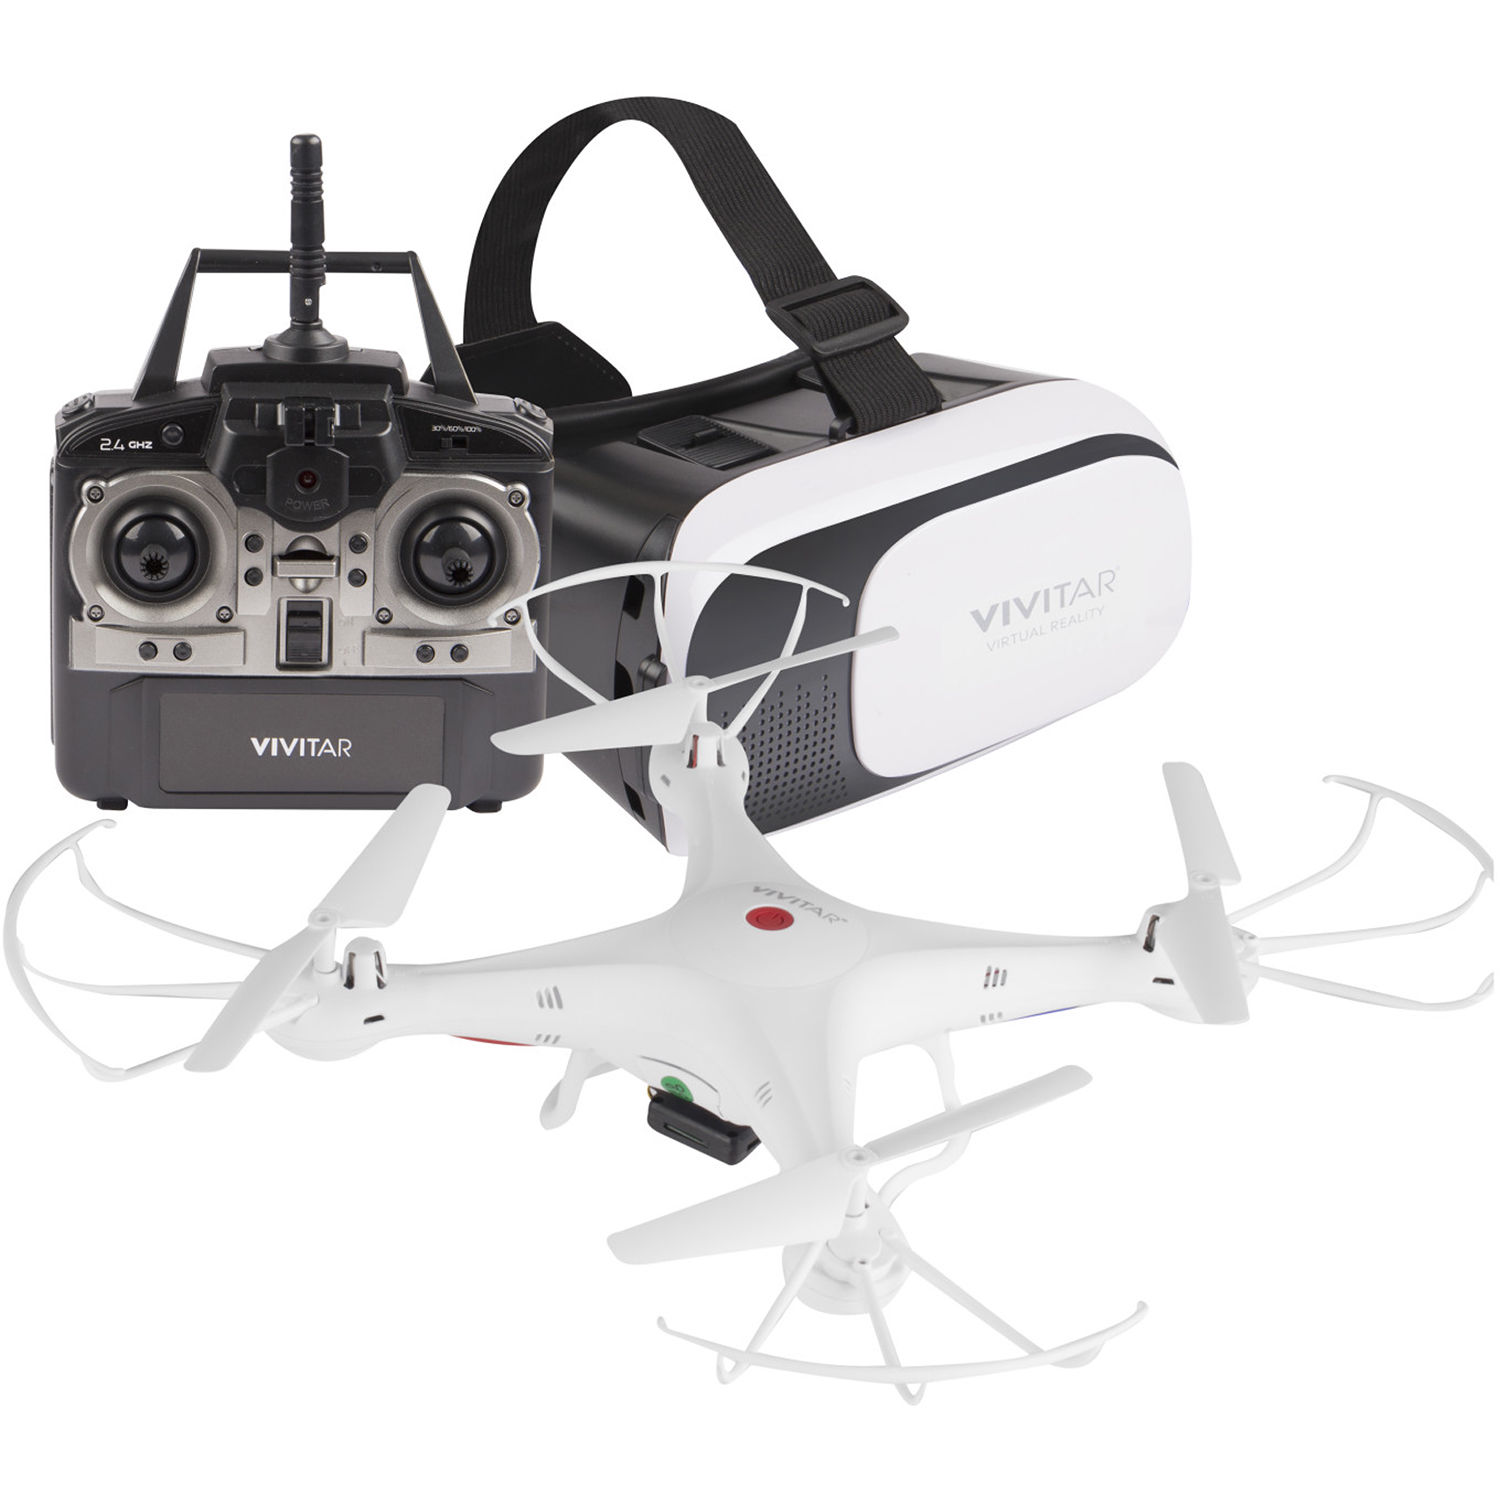 vivitar aerial drone with camera